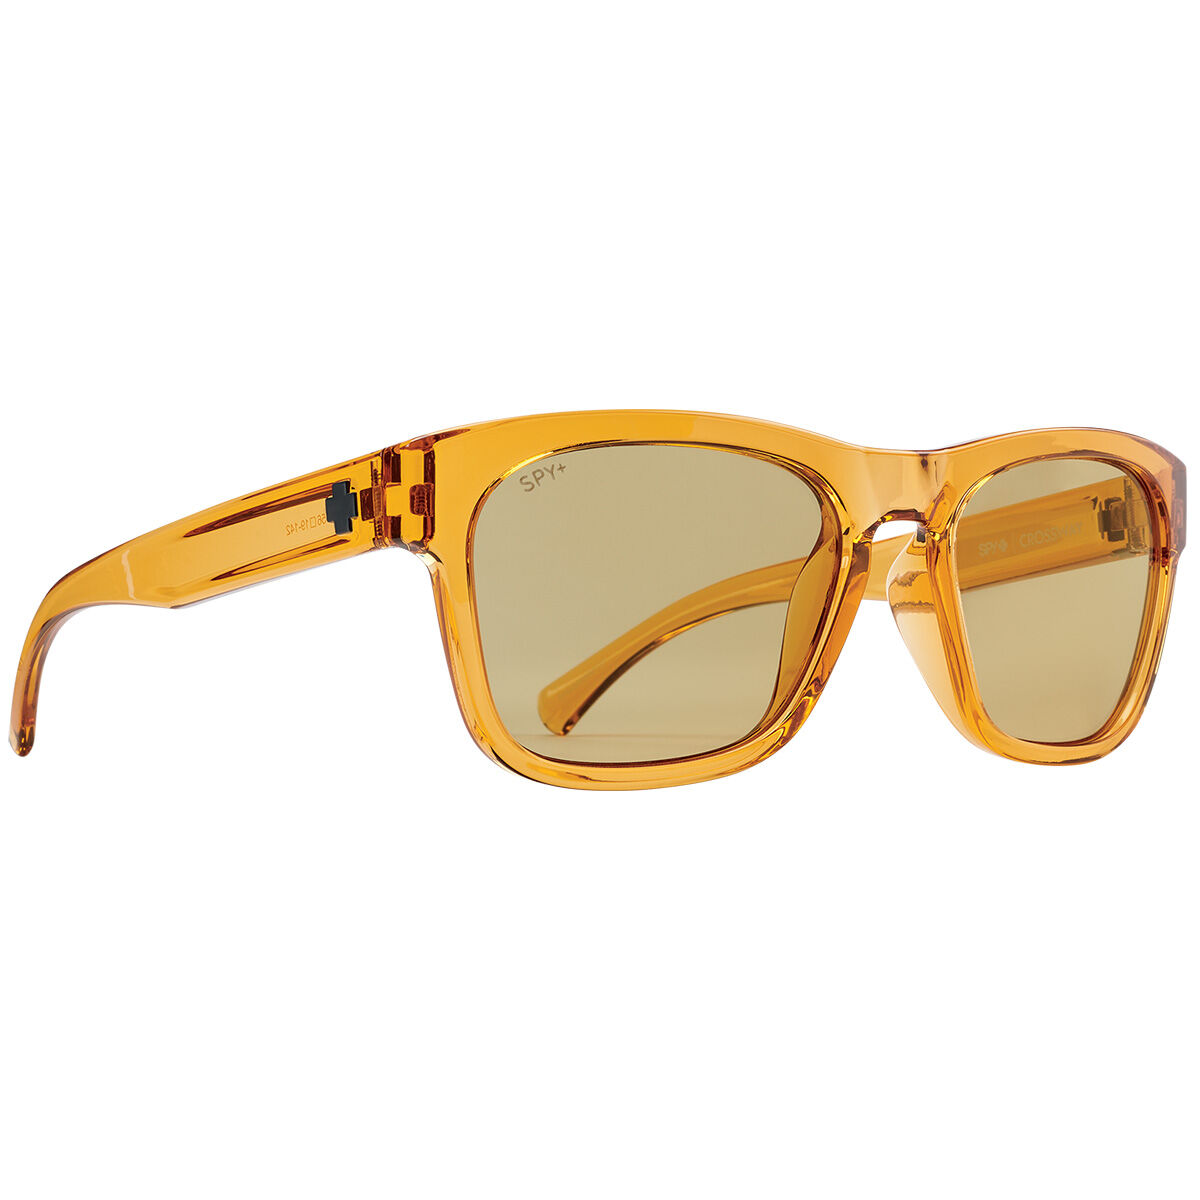 CROSSWAY Mens Sunglasses by Spy Optic